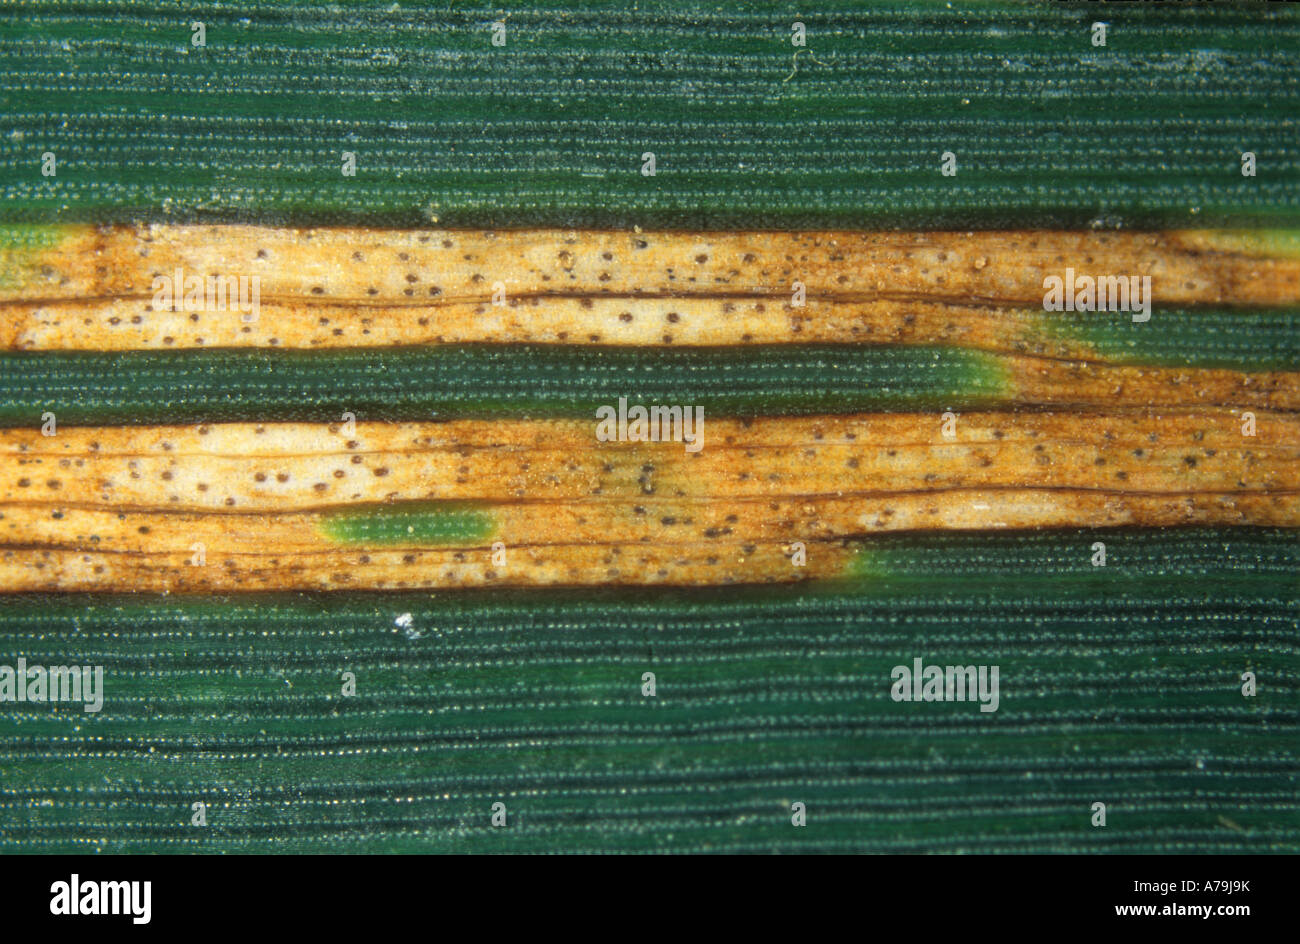 Septoria leaf spot Zymoseptoria tritici lesions pycnidia on a wheat leaf Stock Photo